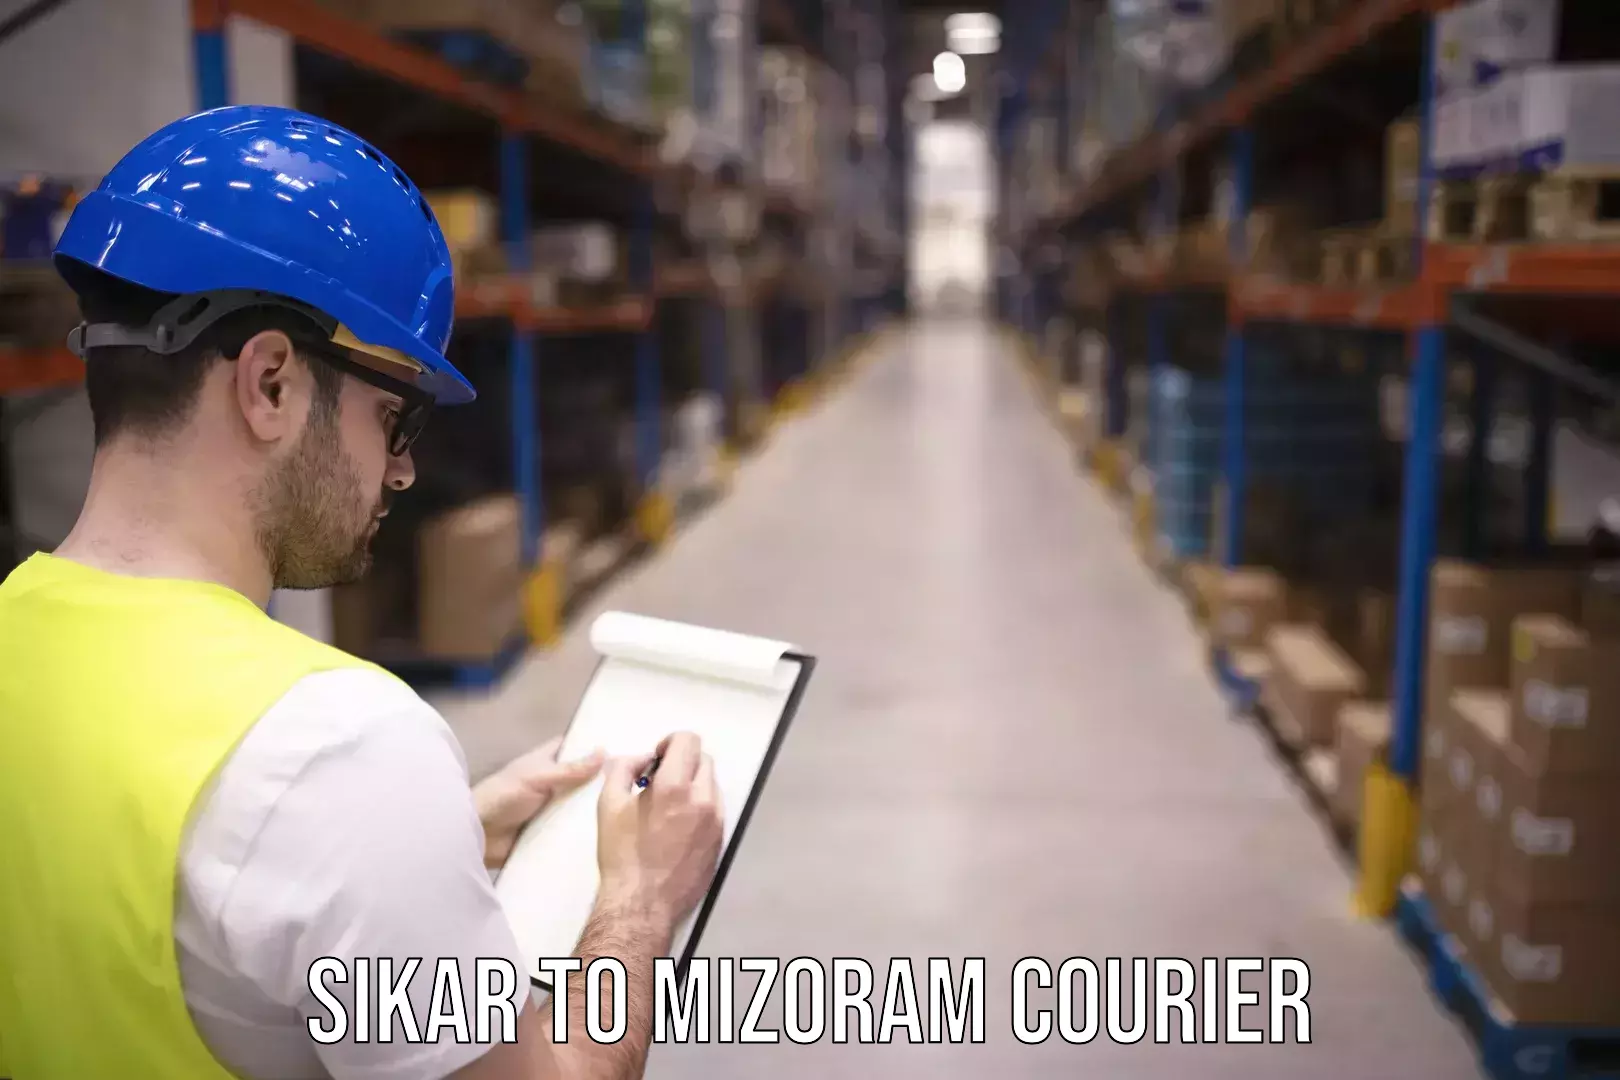 User-friendly delivery service Sikar to Mizoram